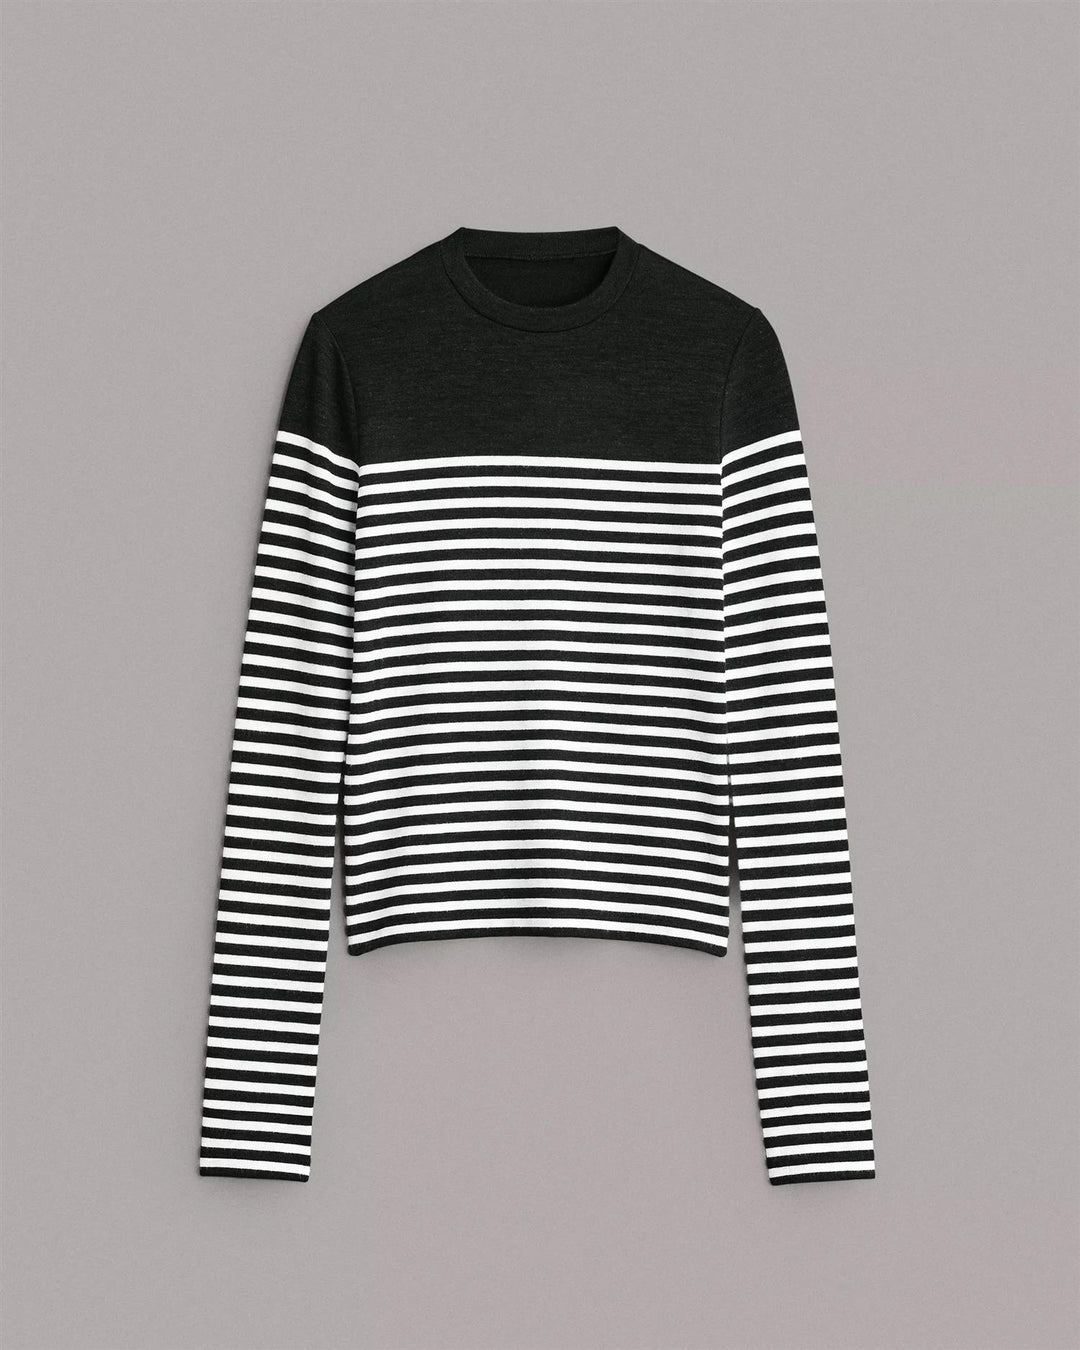 The Longsleeve Knit Breton Stripe Black Multi